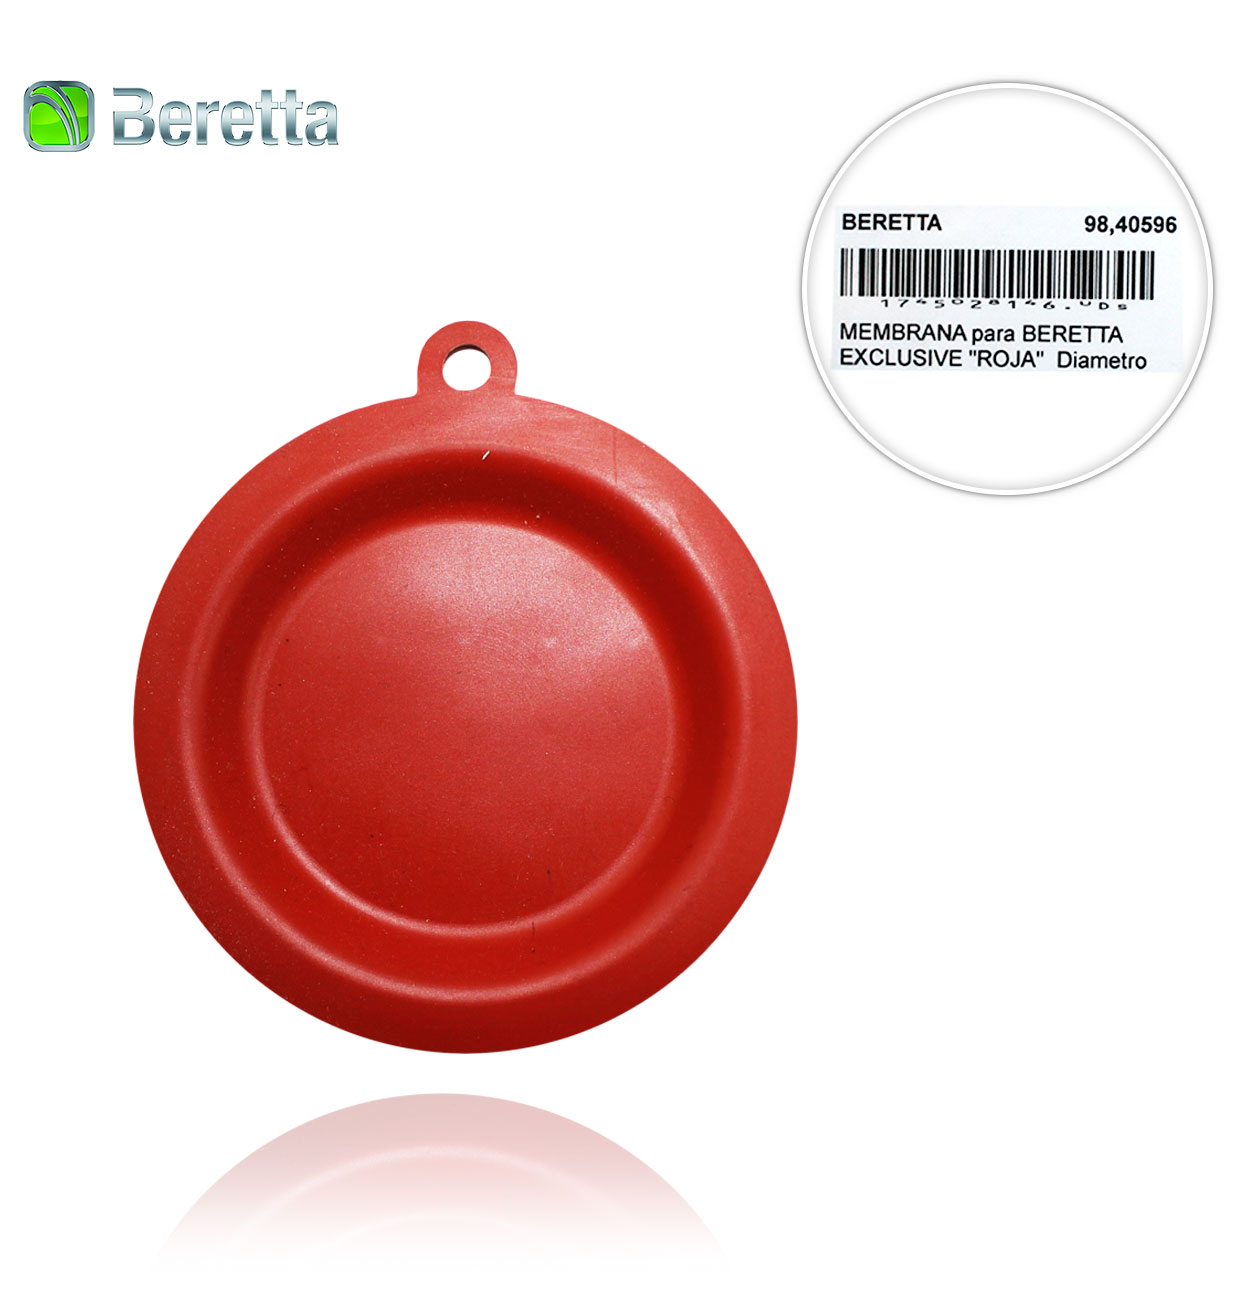 78mm diameter "RED" MEMBRANE for BERETTA EXCLUSIVE